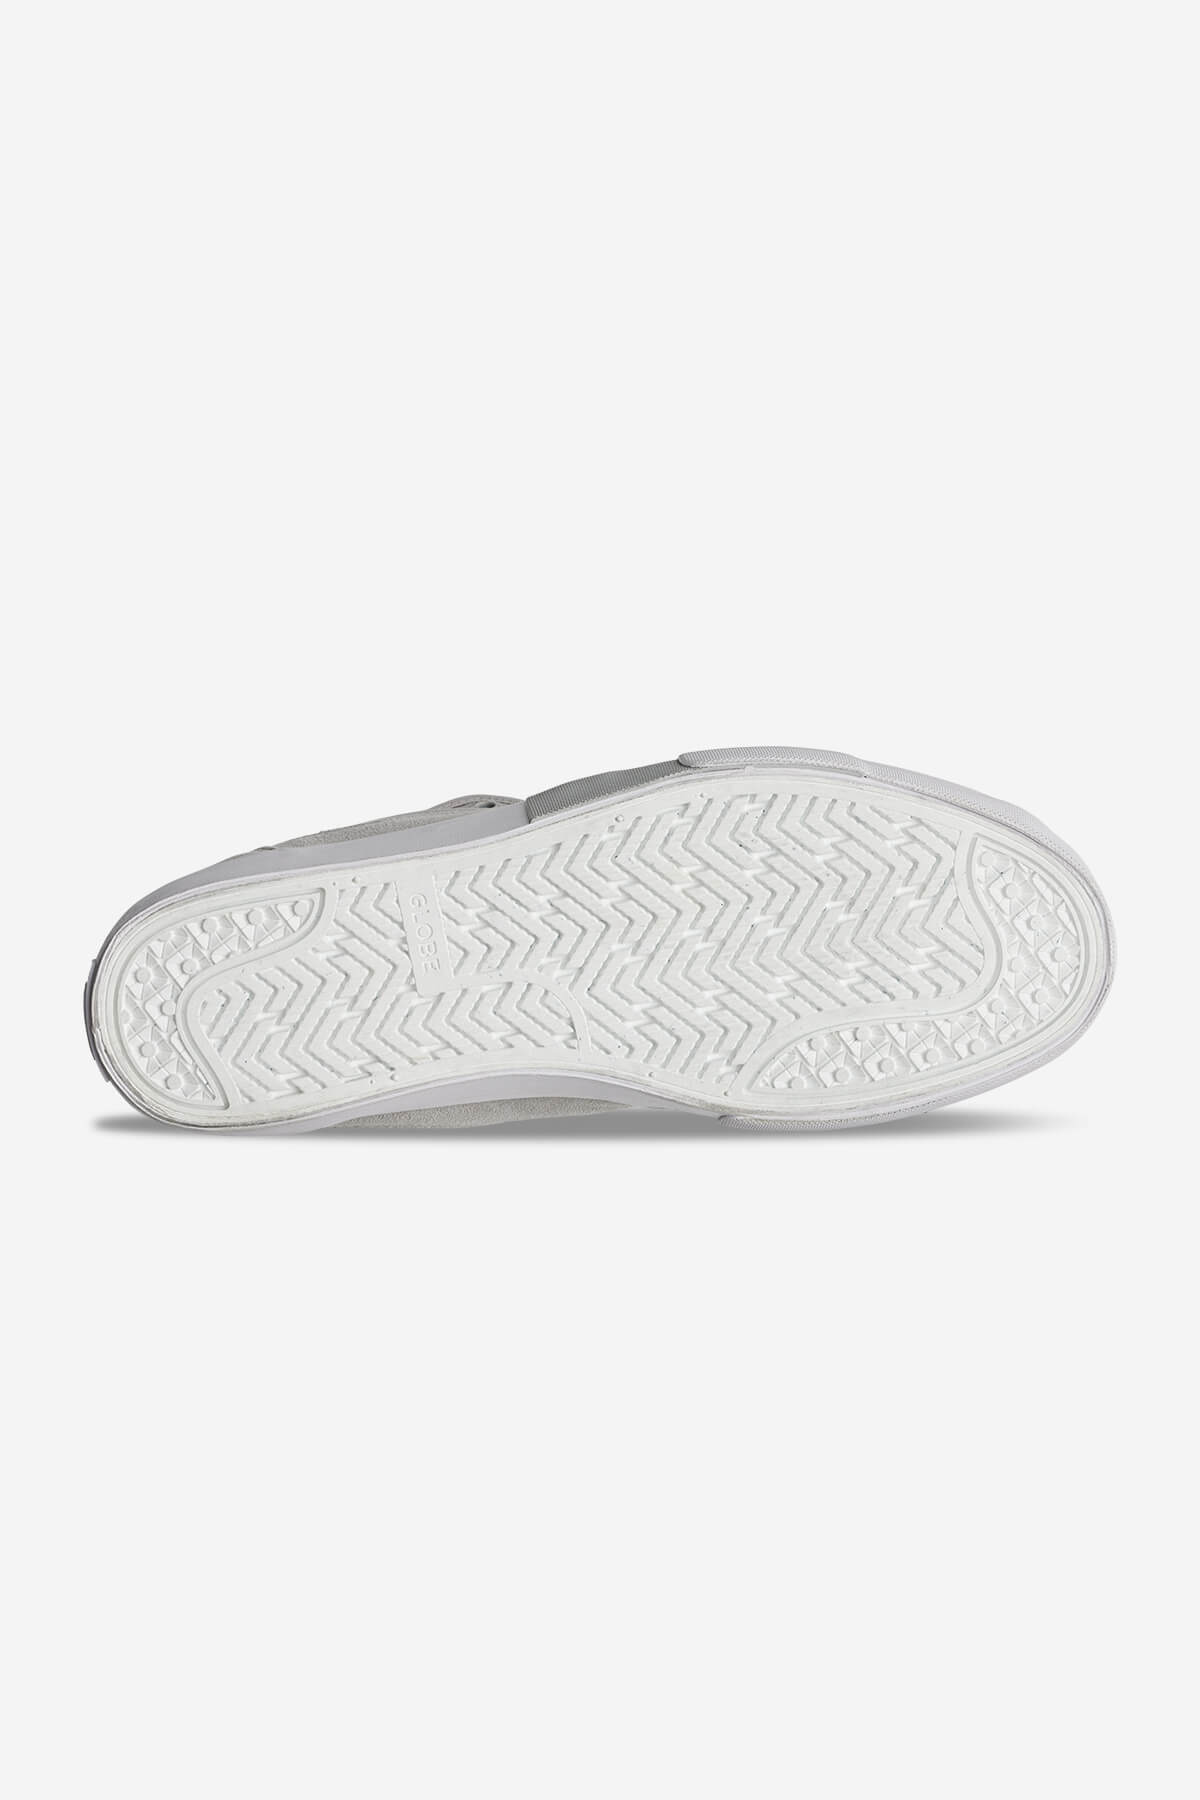 Shop Mahalo Plus - Grey/White - Skate Shoes